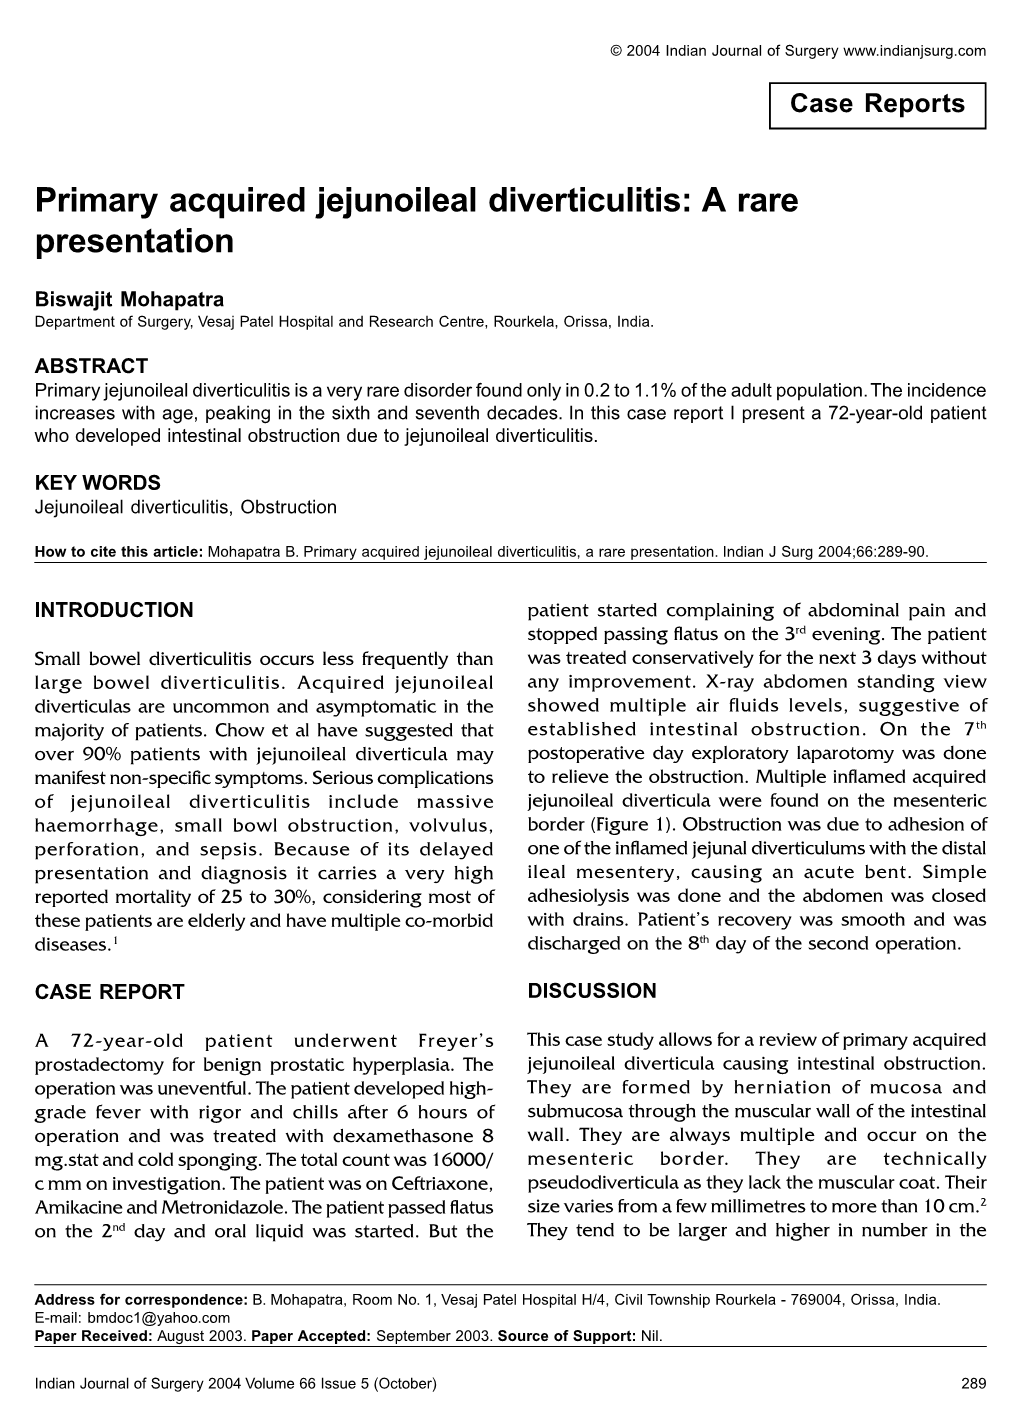 Primary Acquired Jejunoileal Diverticulitis: a Rare Presentation